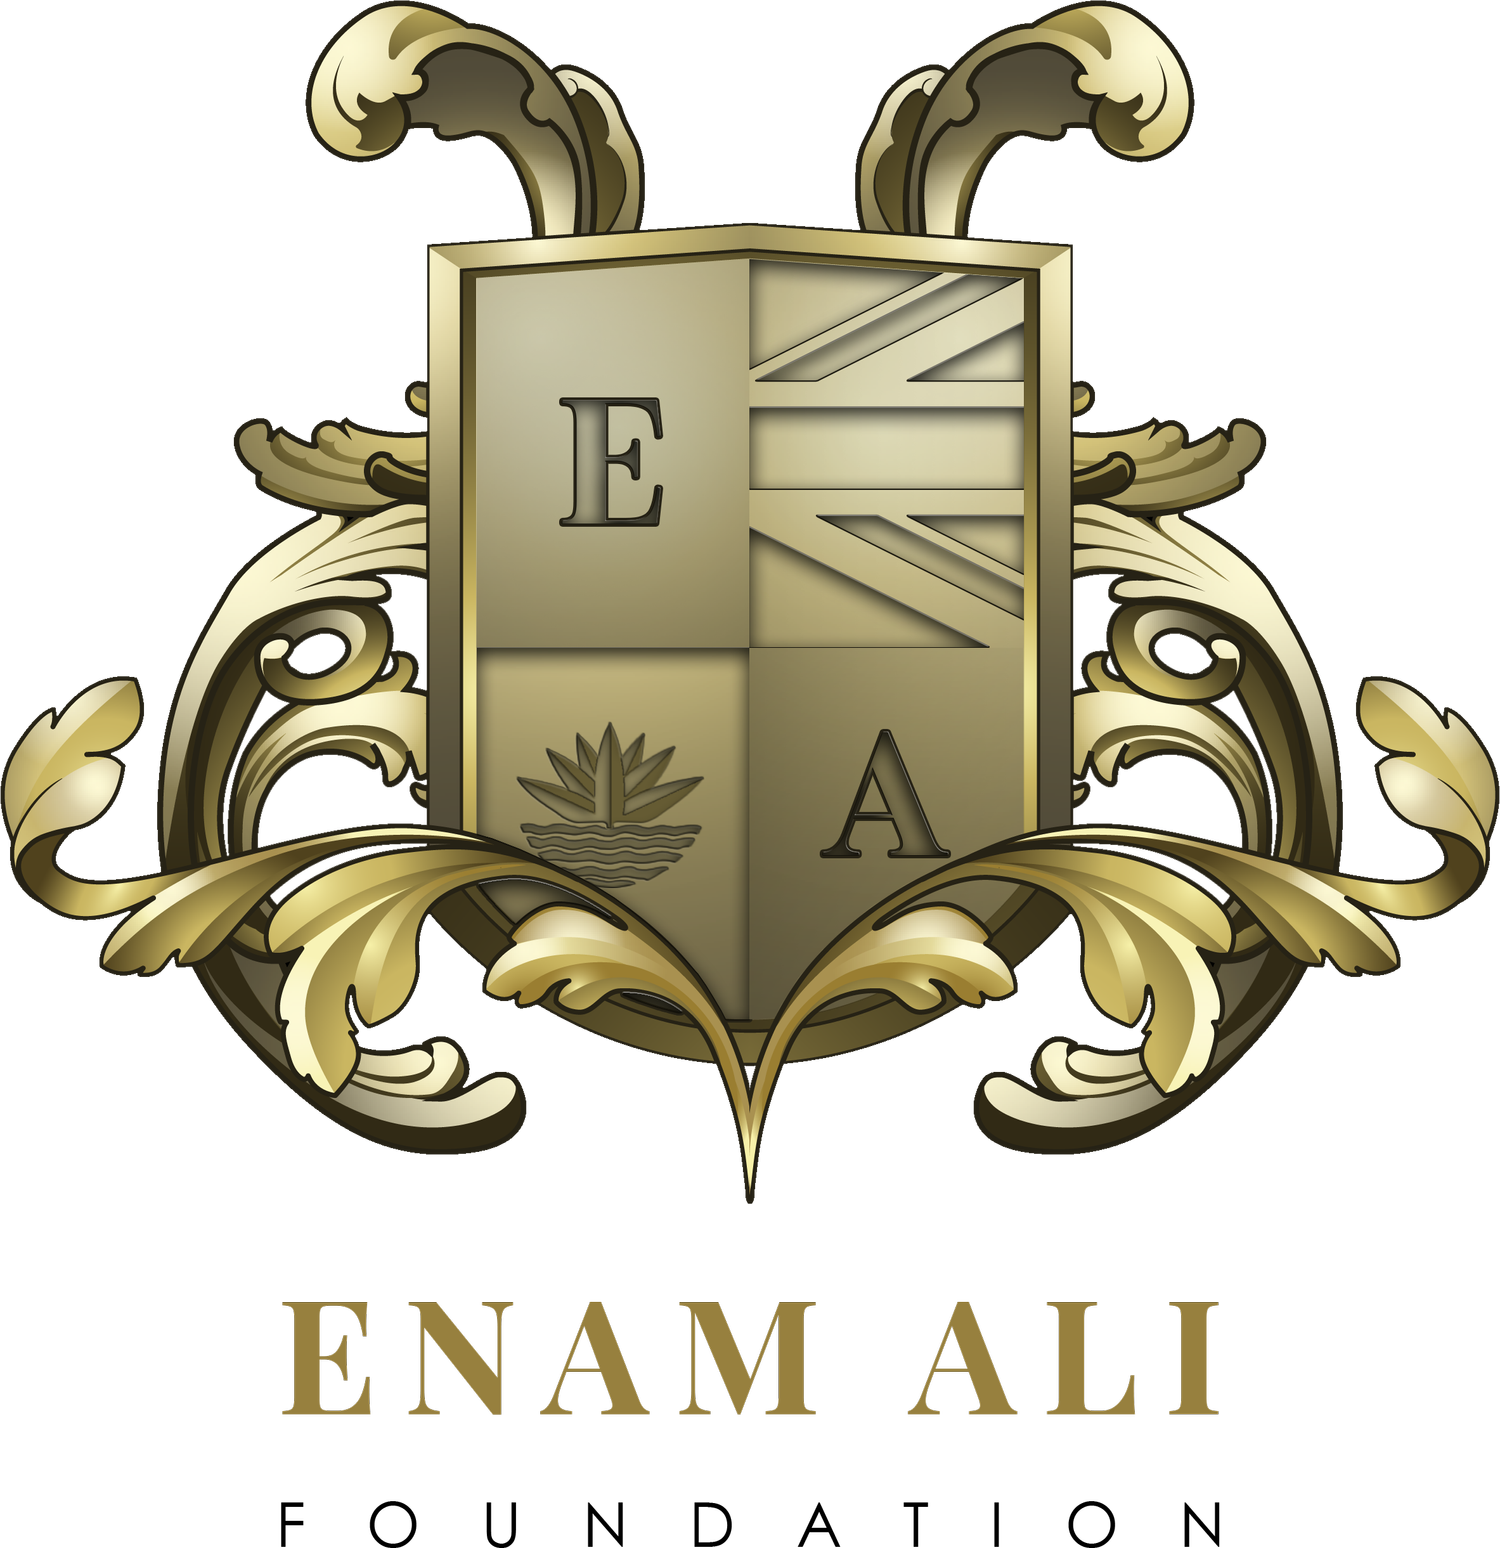 ENAM ALI FOUNDATION